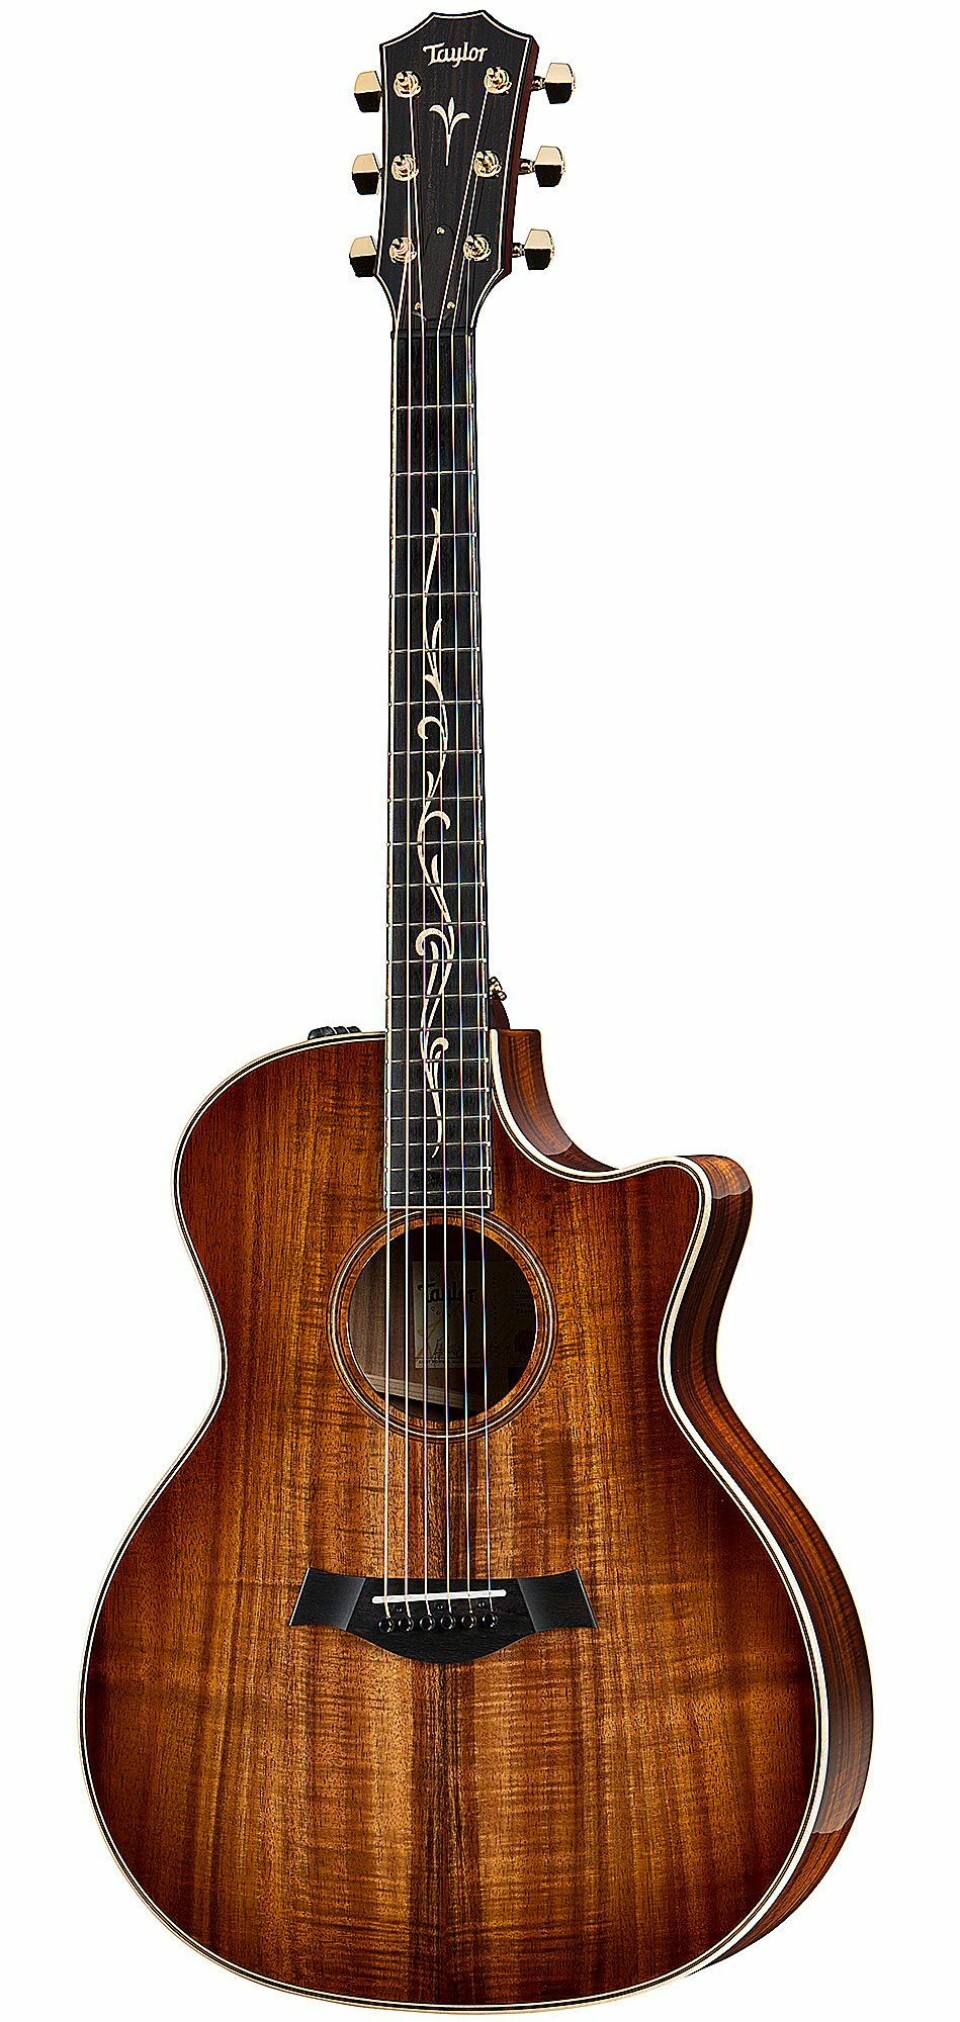 Taylor K24ce. Pris: 37.000,- Foto: Taylor Guitars.